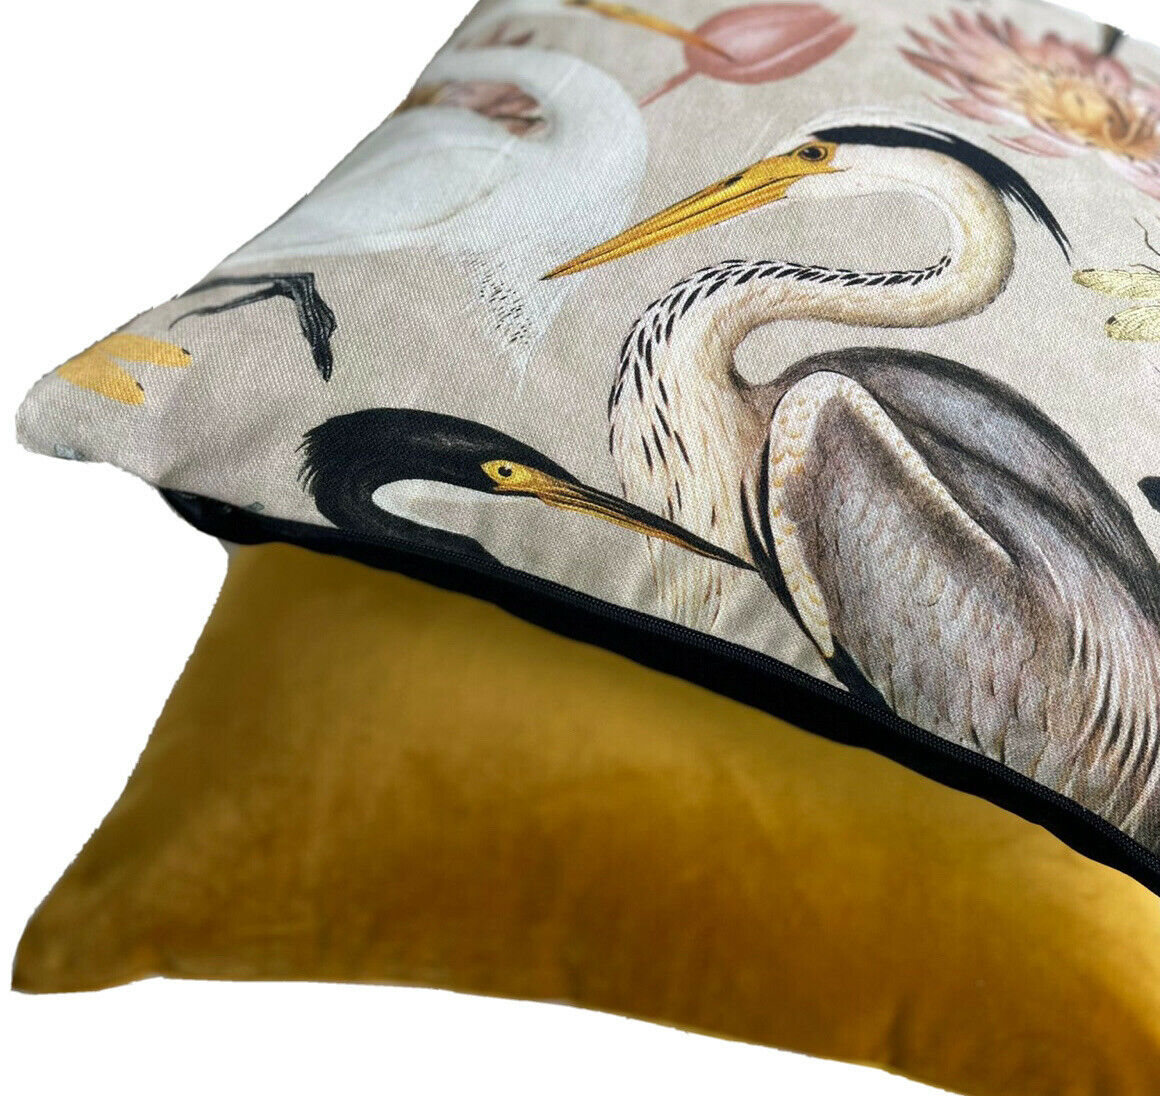 Birds Cushion Cover Herons Bird Pattern Throw Pillow Case 16” - 22”